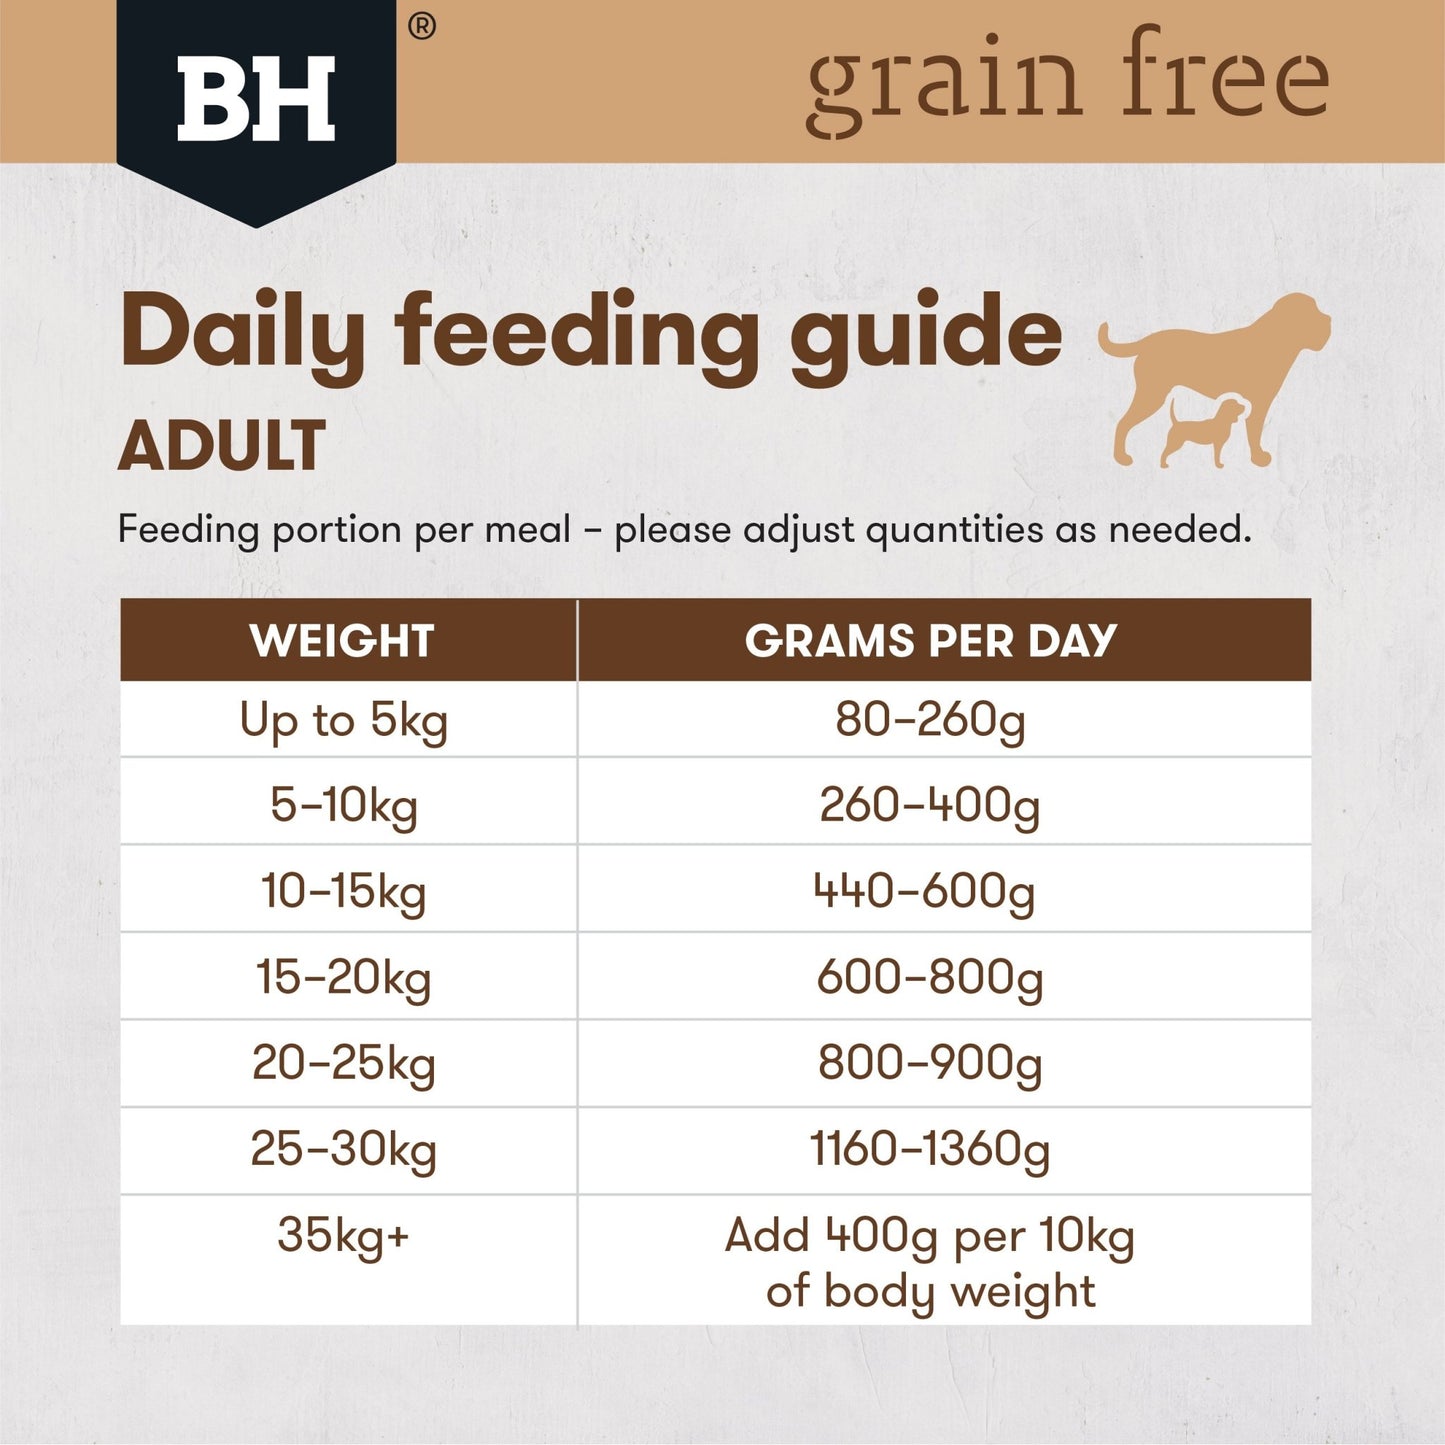 Black Hawk Grain Free Wet Dog Food 100g x 9 Chicken - Woonona Petfood & Produce